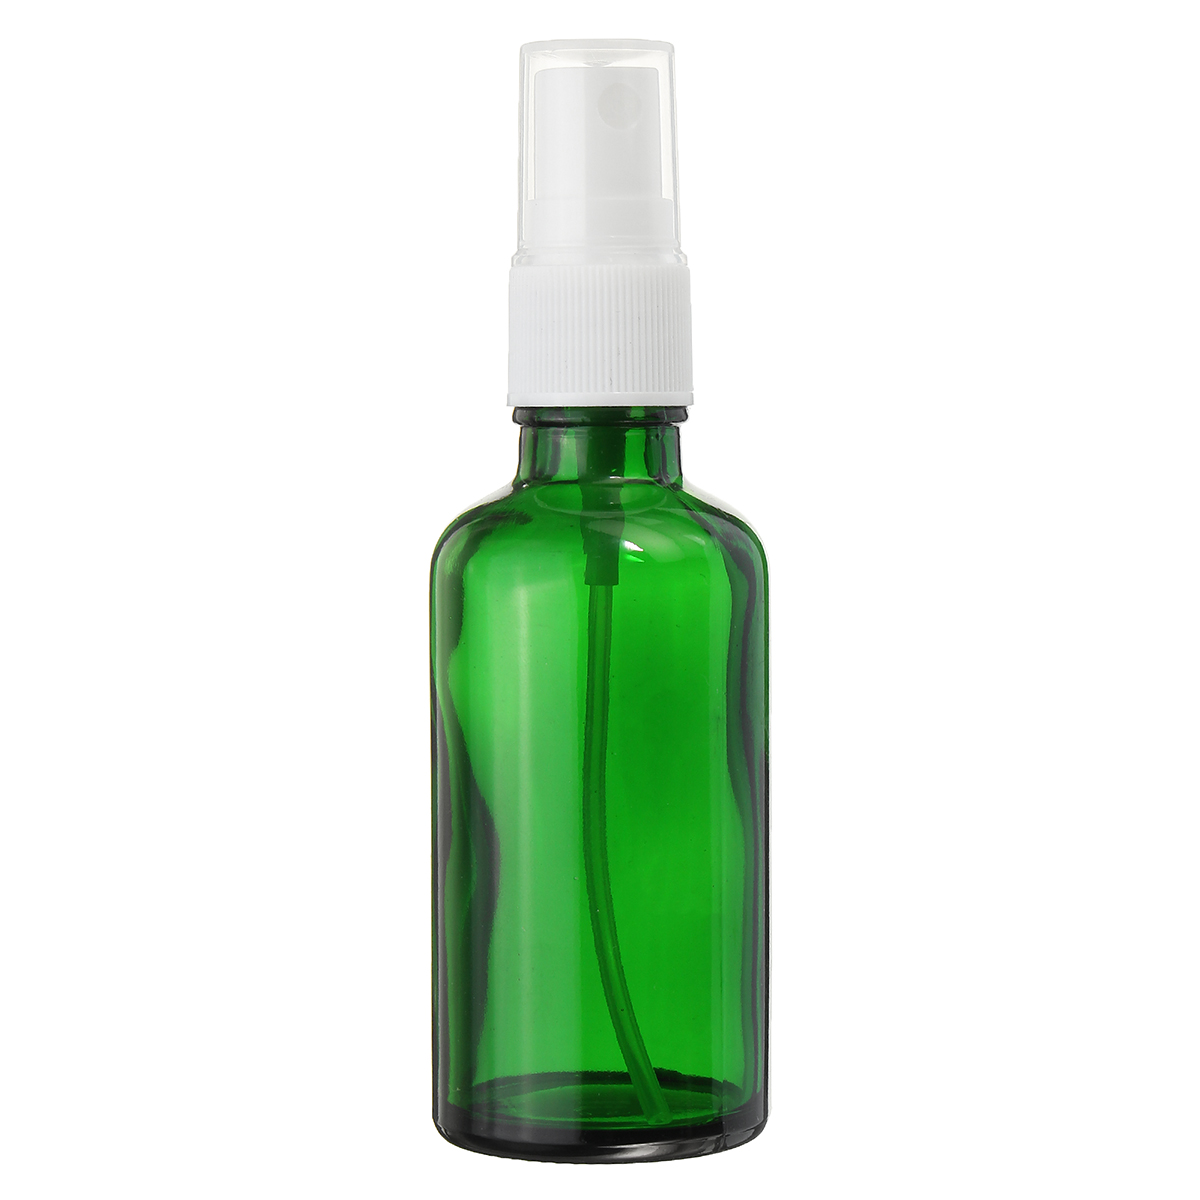 153050ml-Mini-Green-Spray-Bottle-Sprayer-Refillable-Container-w-Drop--Spray-for-Aromatherapy-Perfume-1449157-1